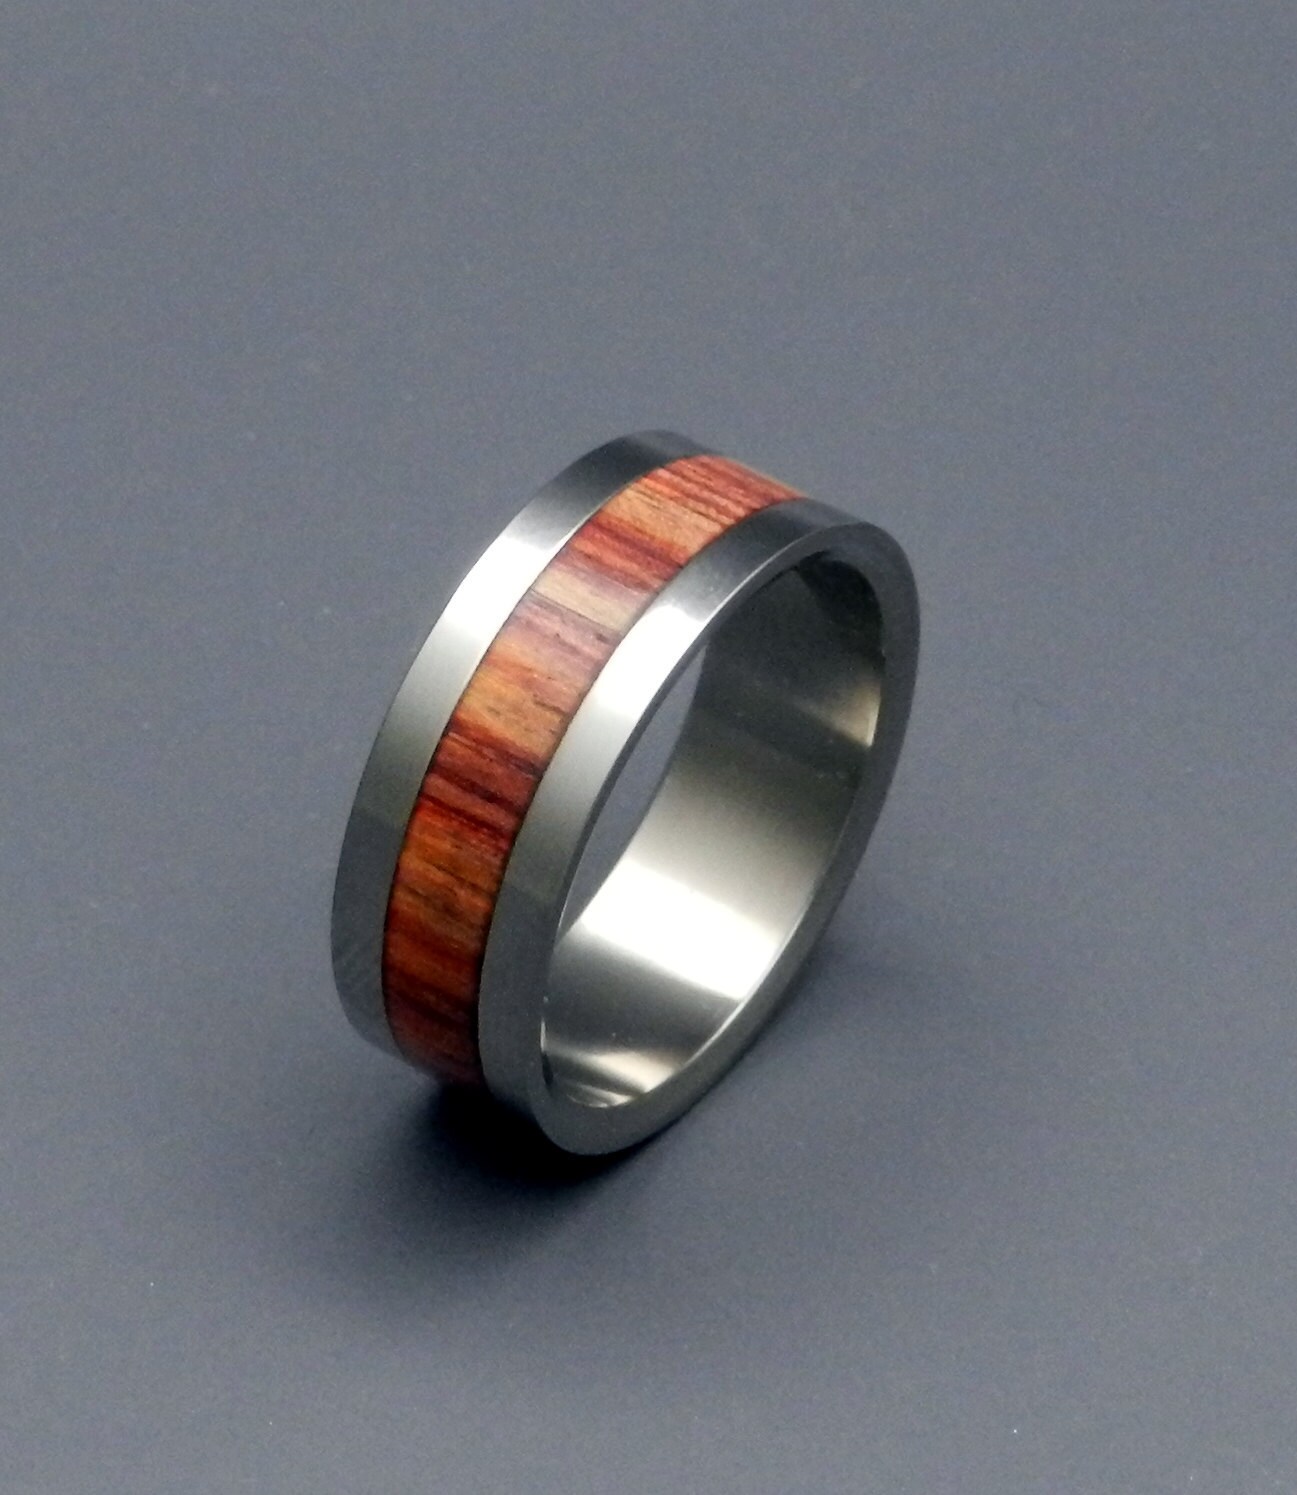 Wooden Wedding Rings on Tulip Wooden Wedding Rings By Minterandrichterdes On Etsy